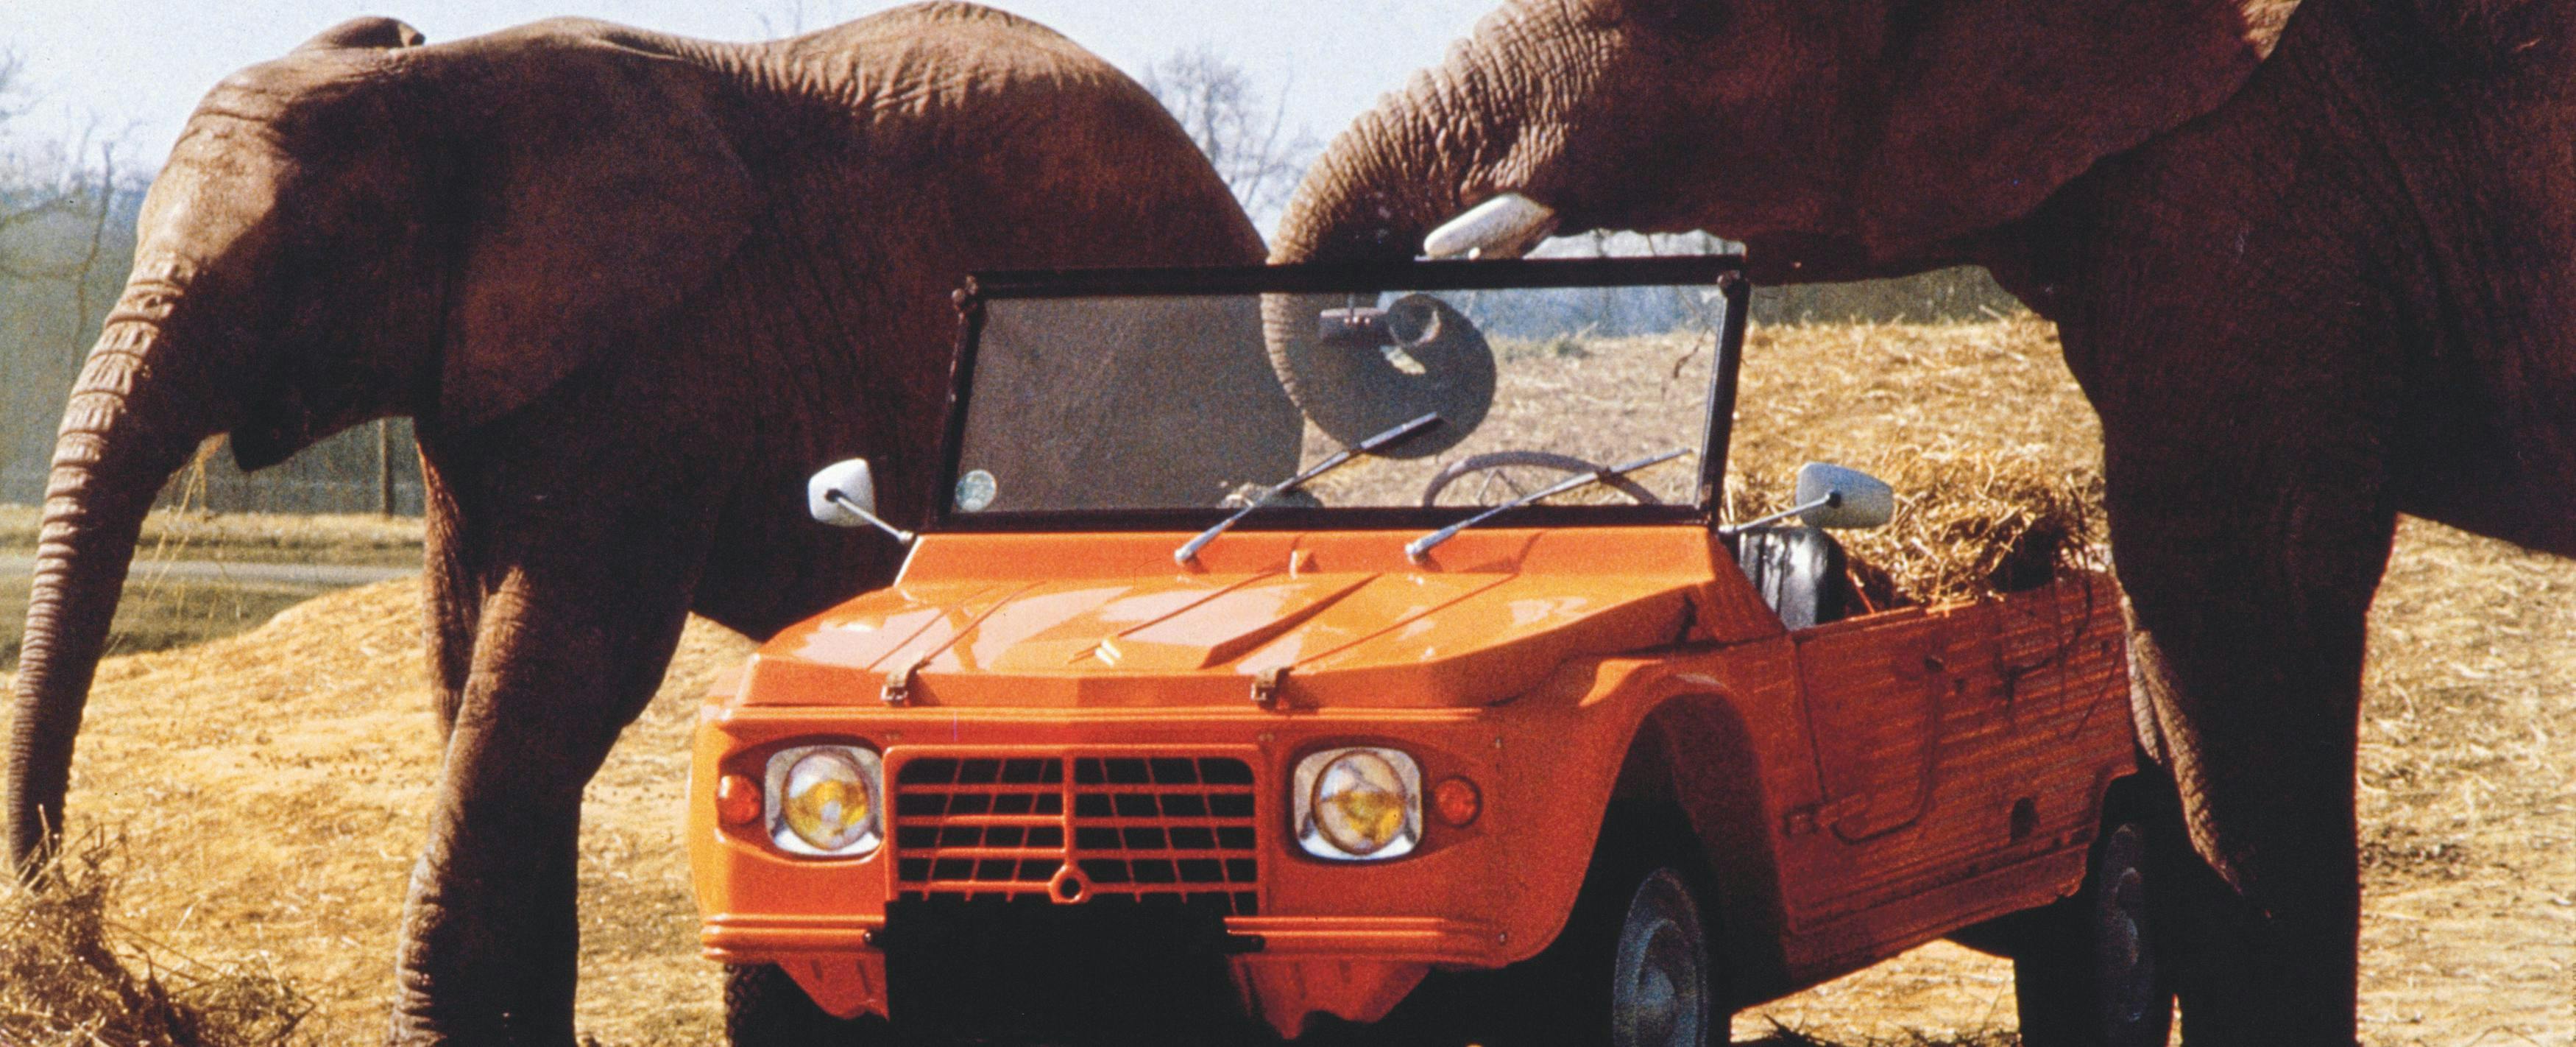 elephant animal mammal wildlife car transportation vehicle automobile